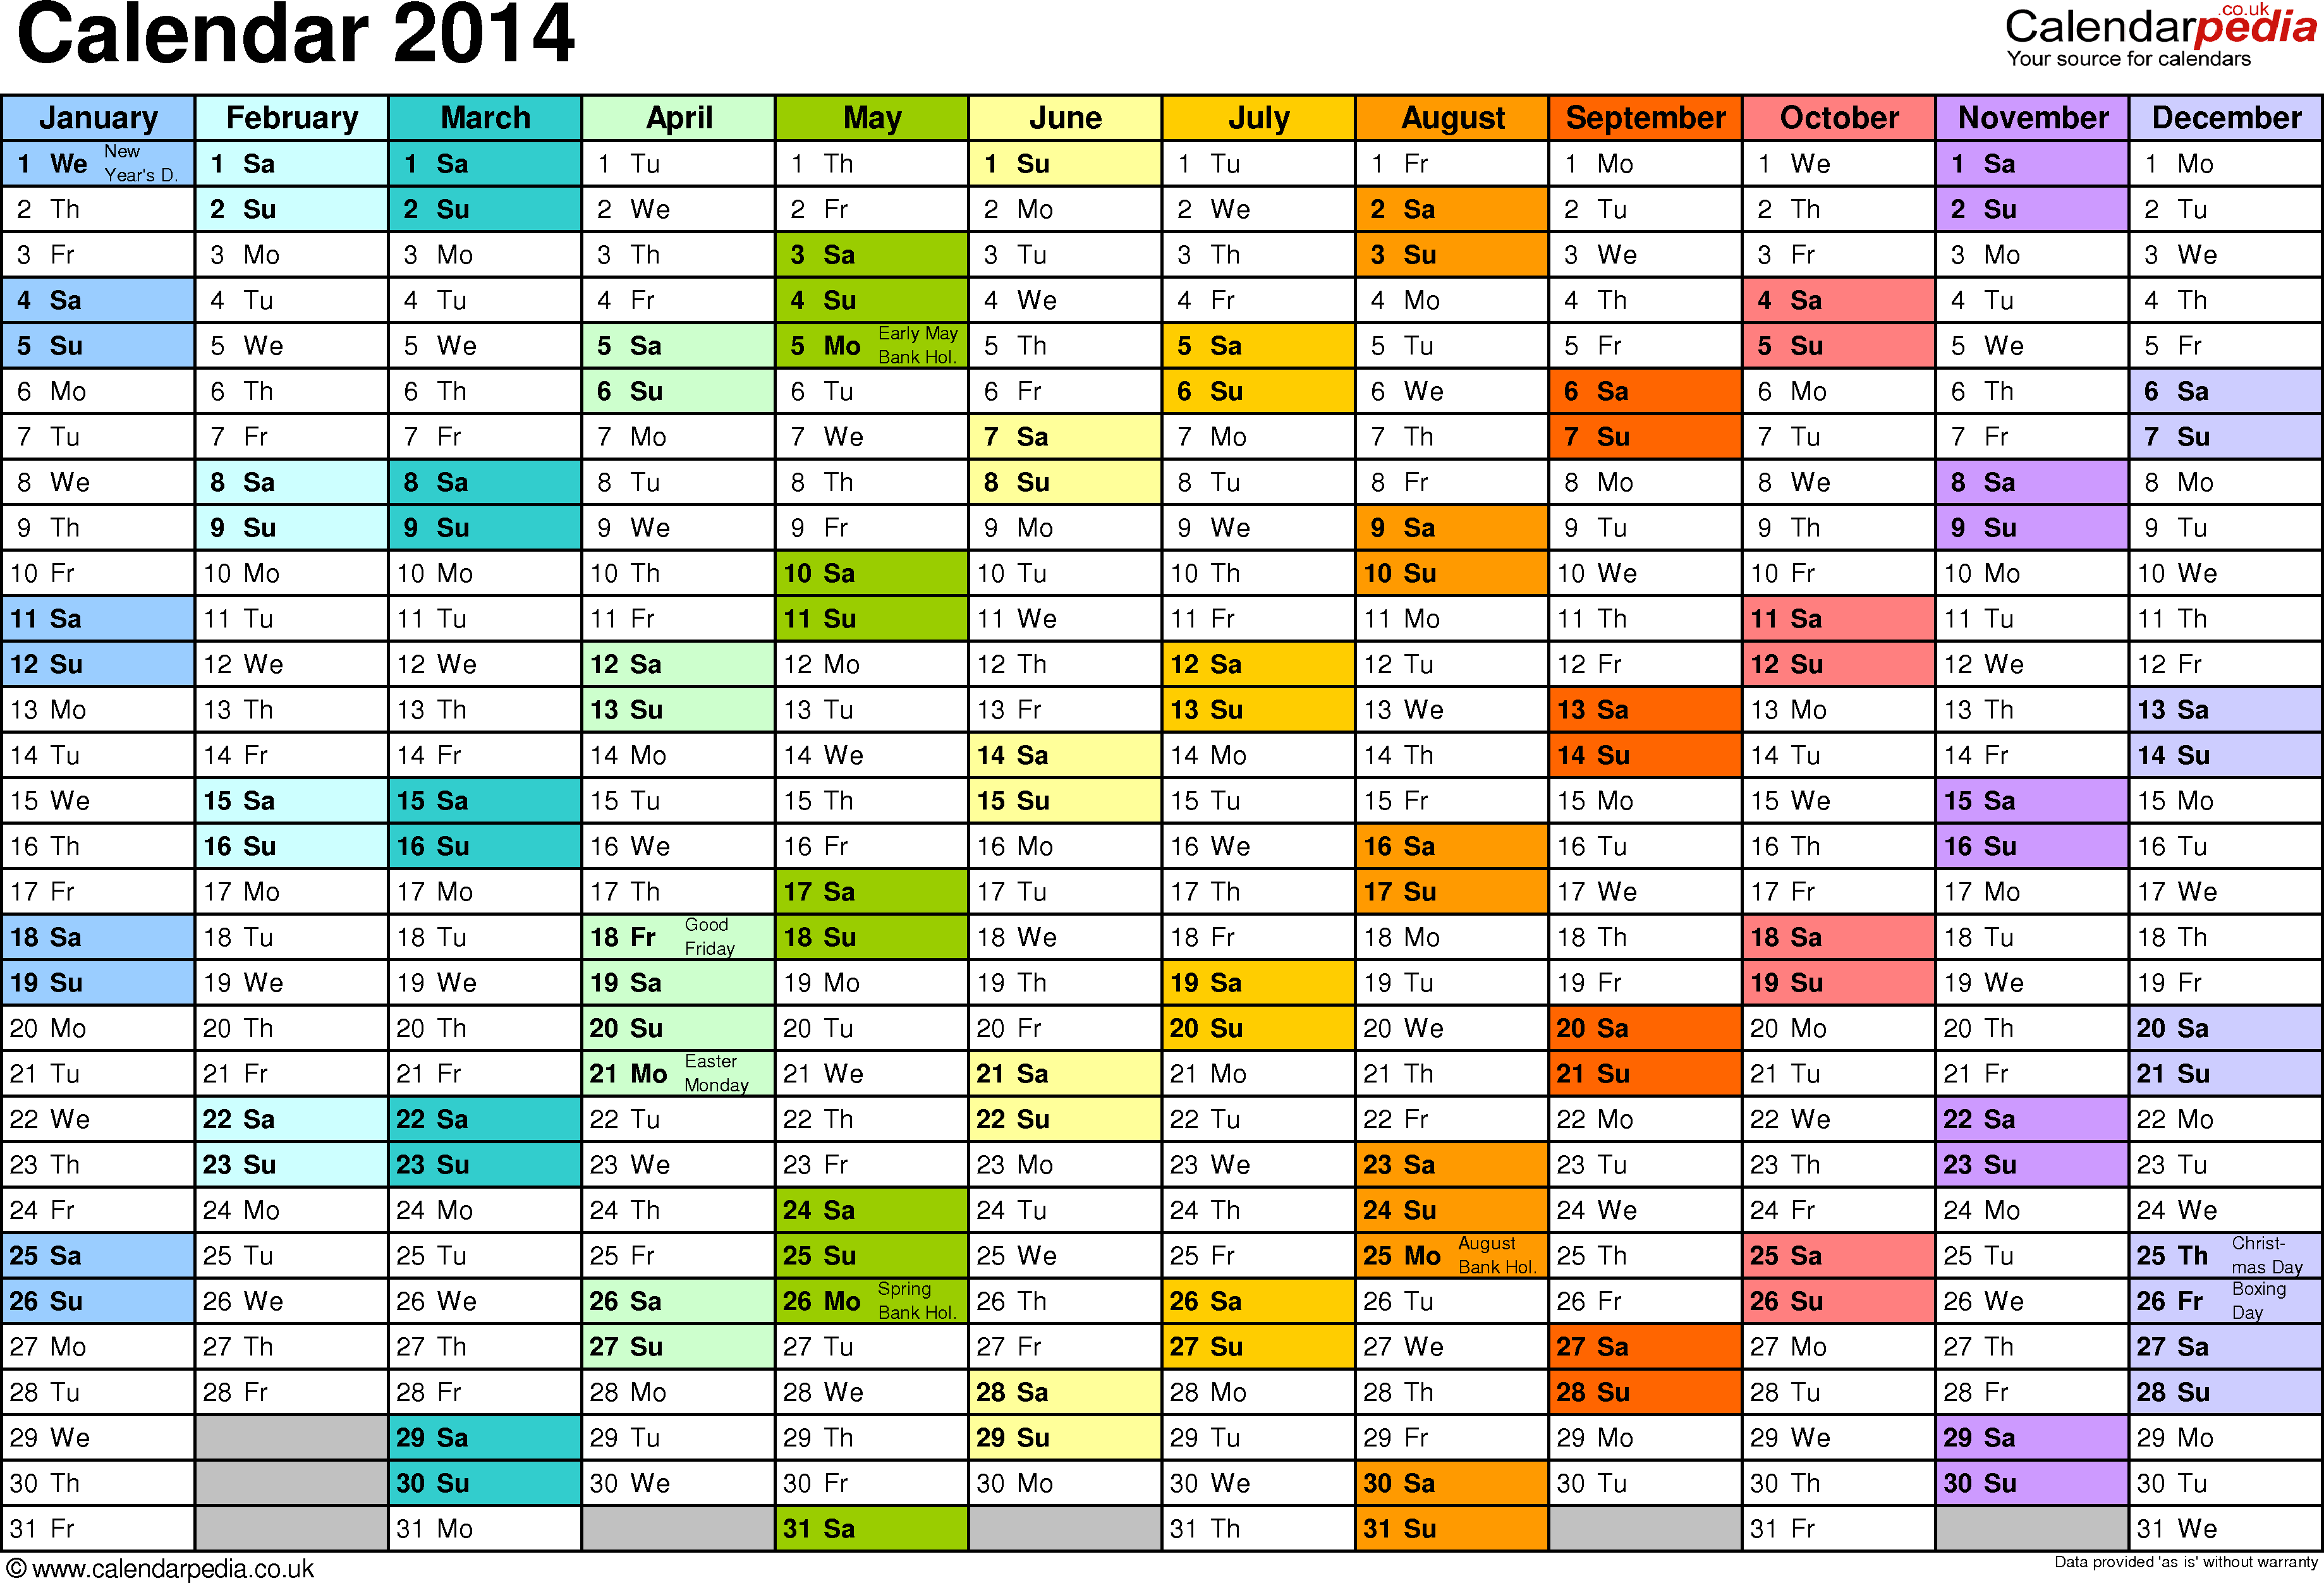 Excel year planner/calendar 2014 UK: 15 free printable templates